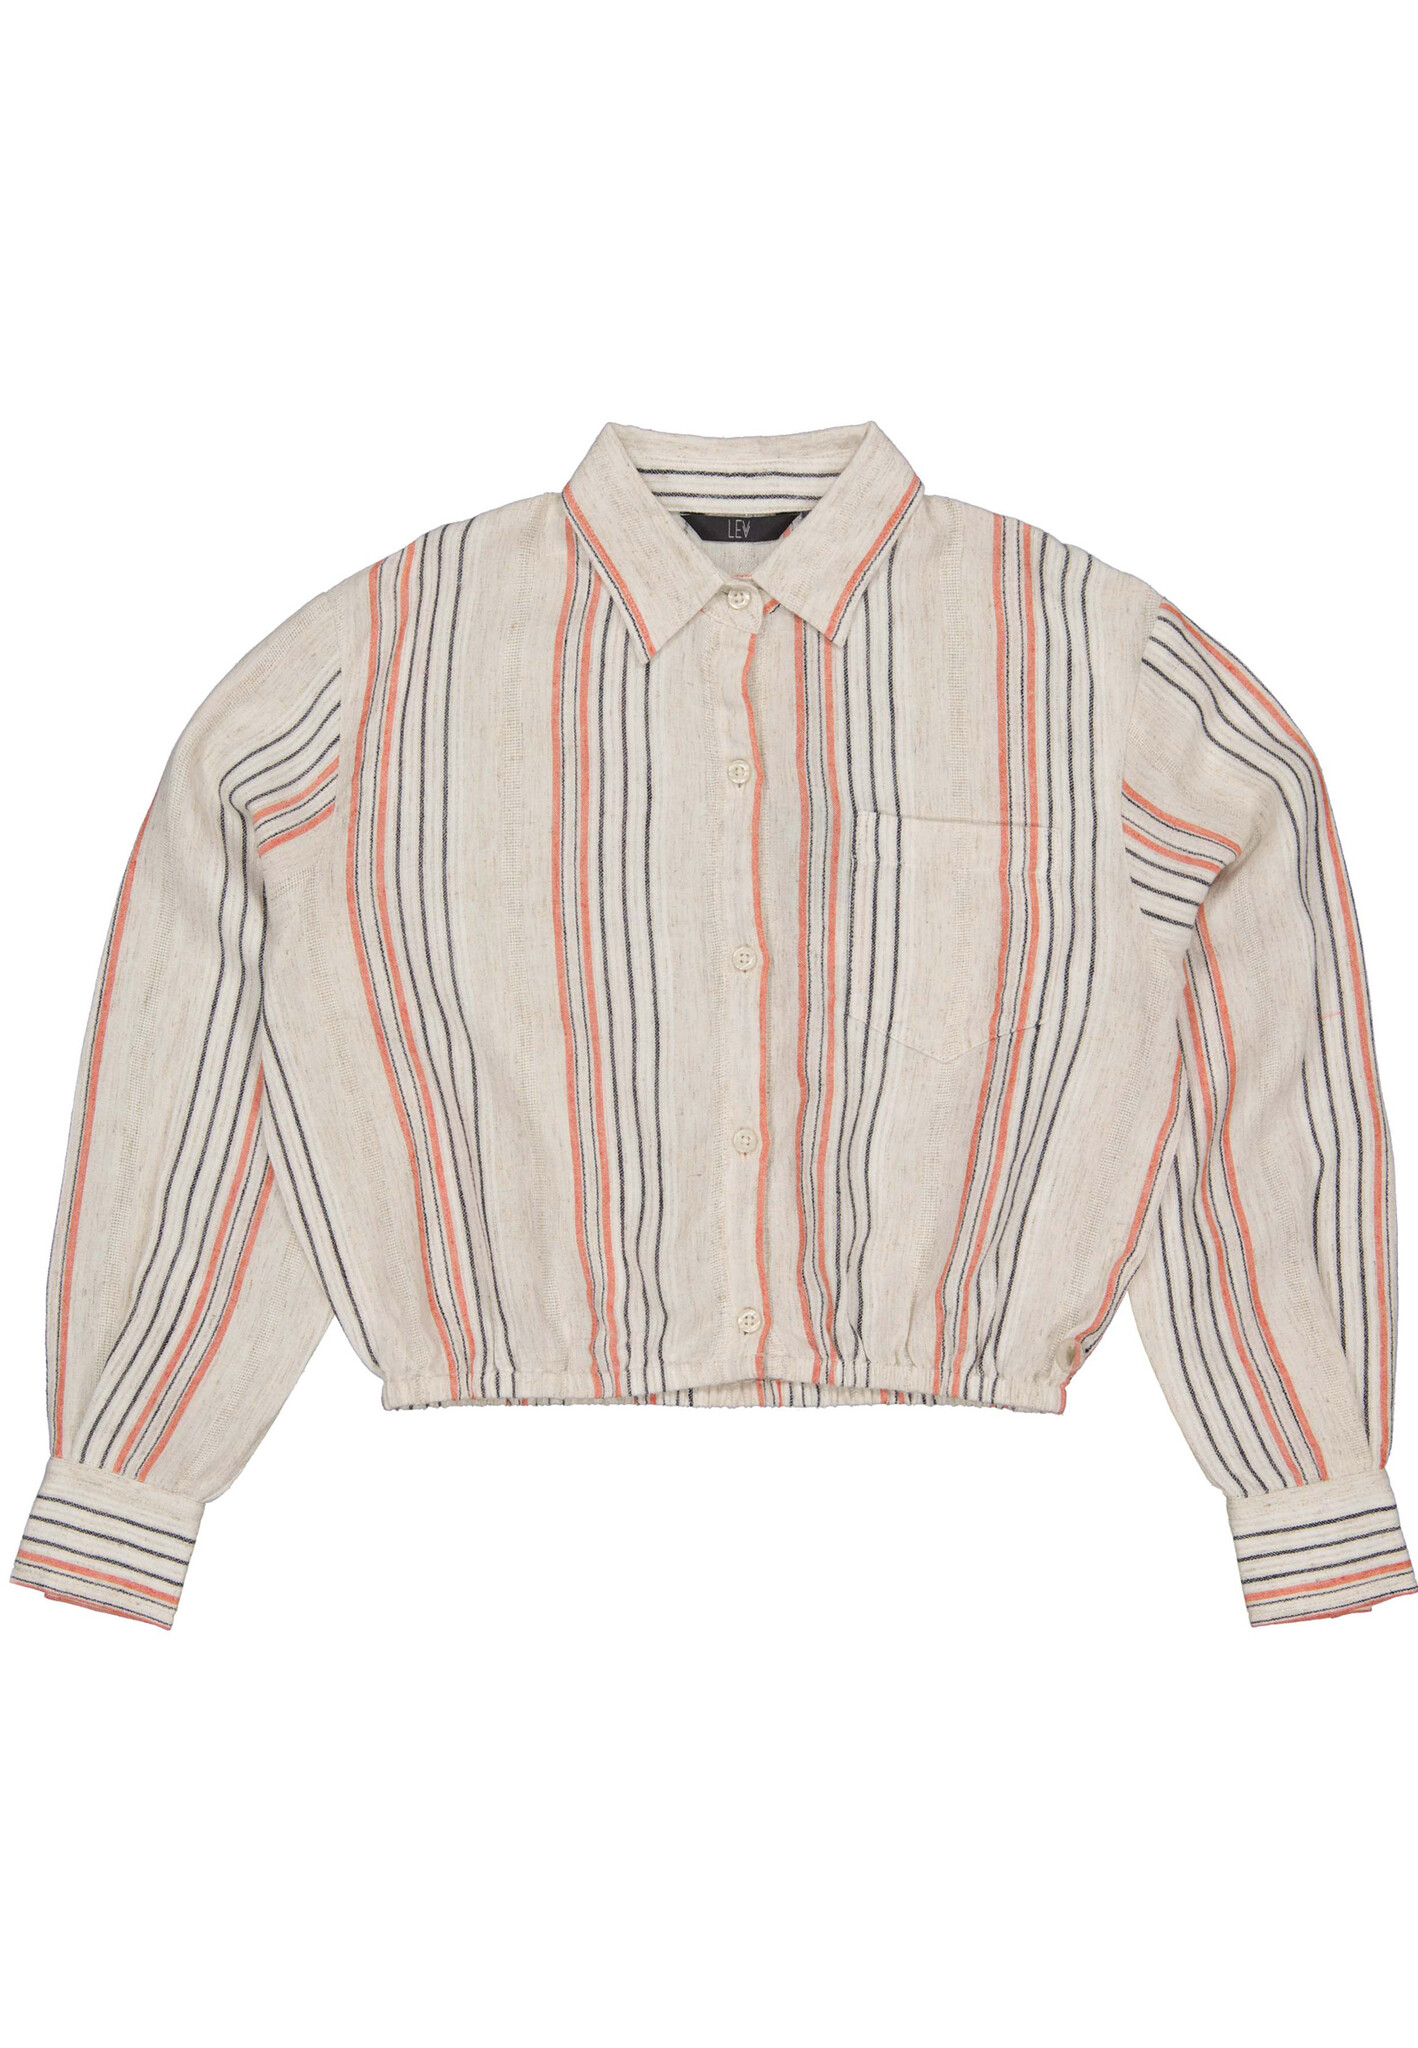 Afbeelding van Quapi Meiden blouse kaori aop taupe stripe